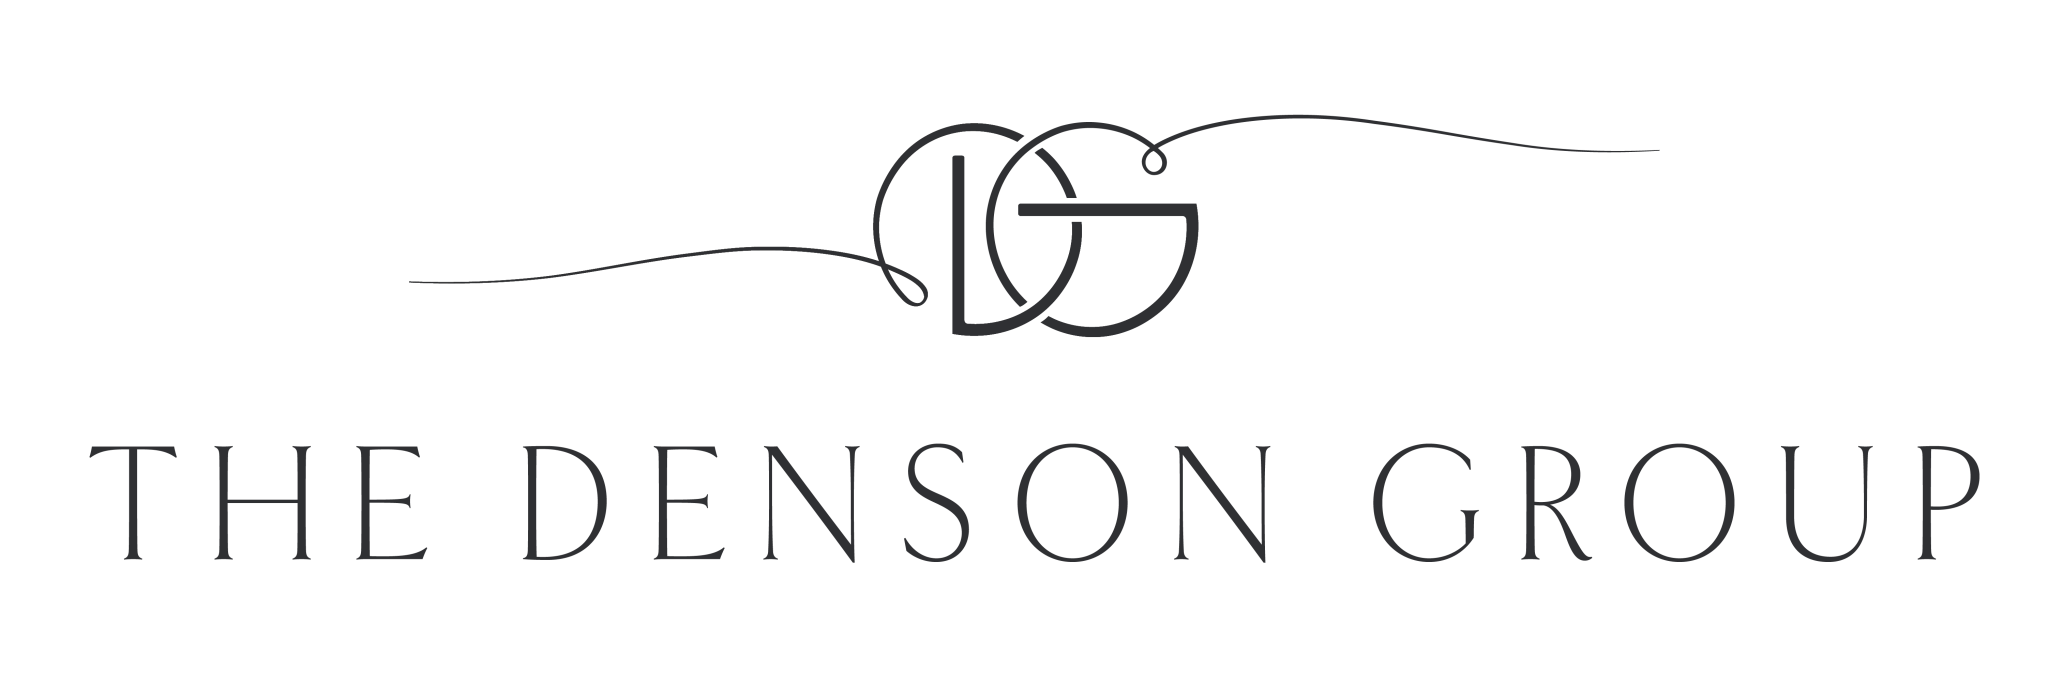 The-Denson-Group_Logo-no-tagline-black-2048x699